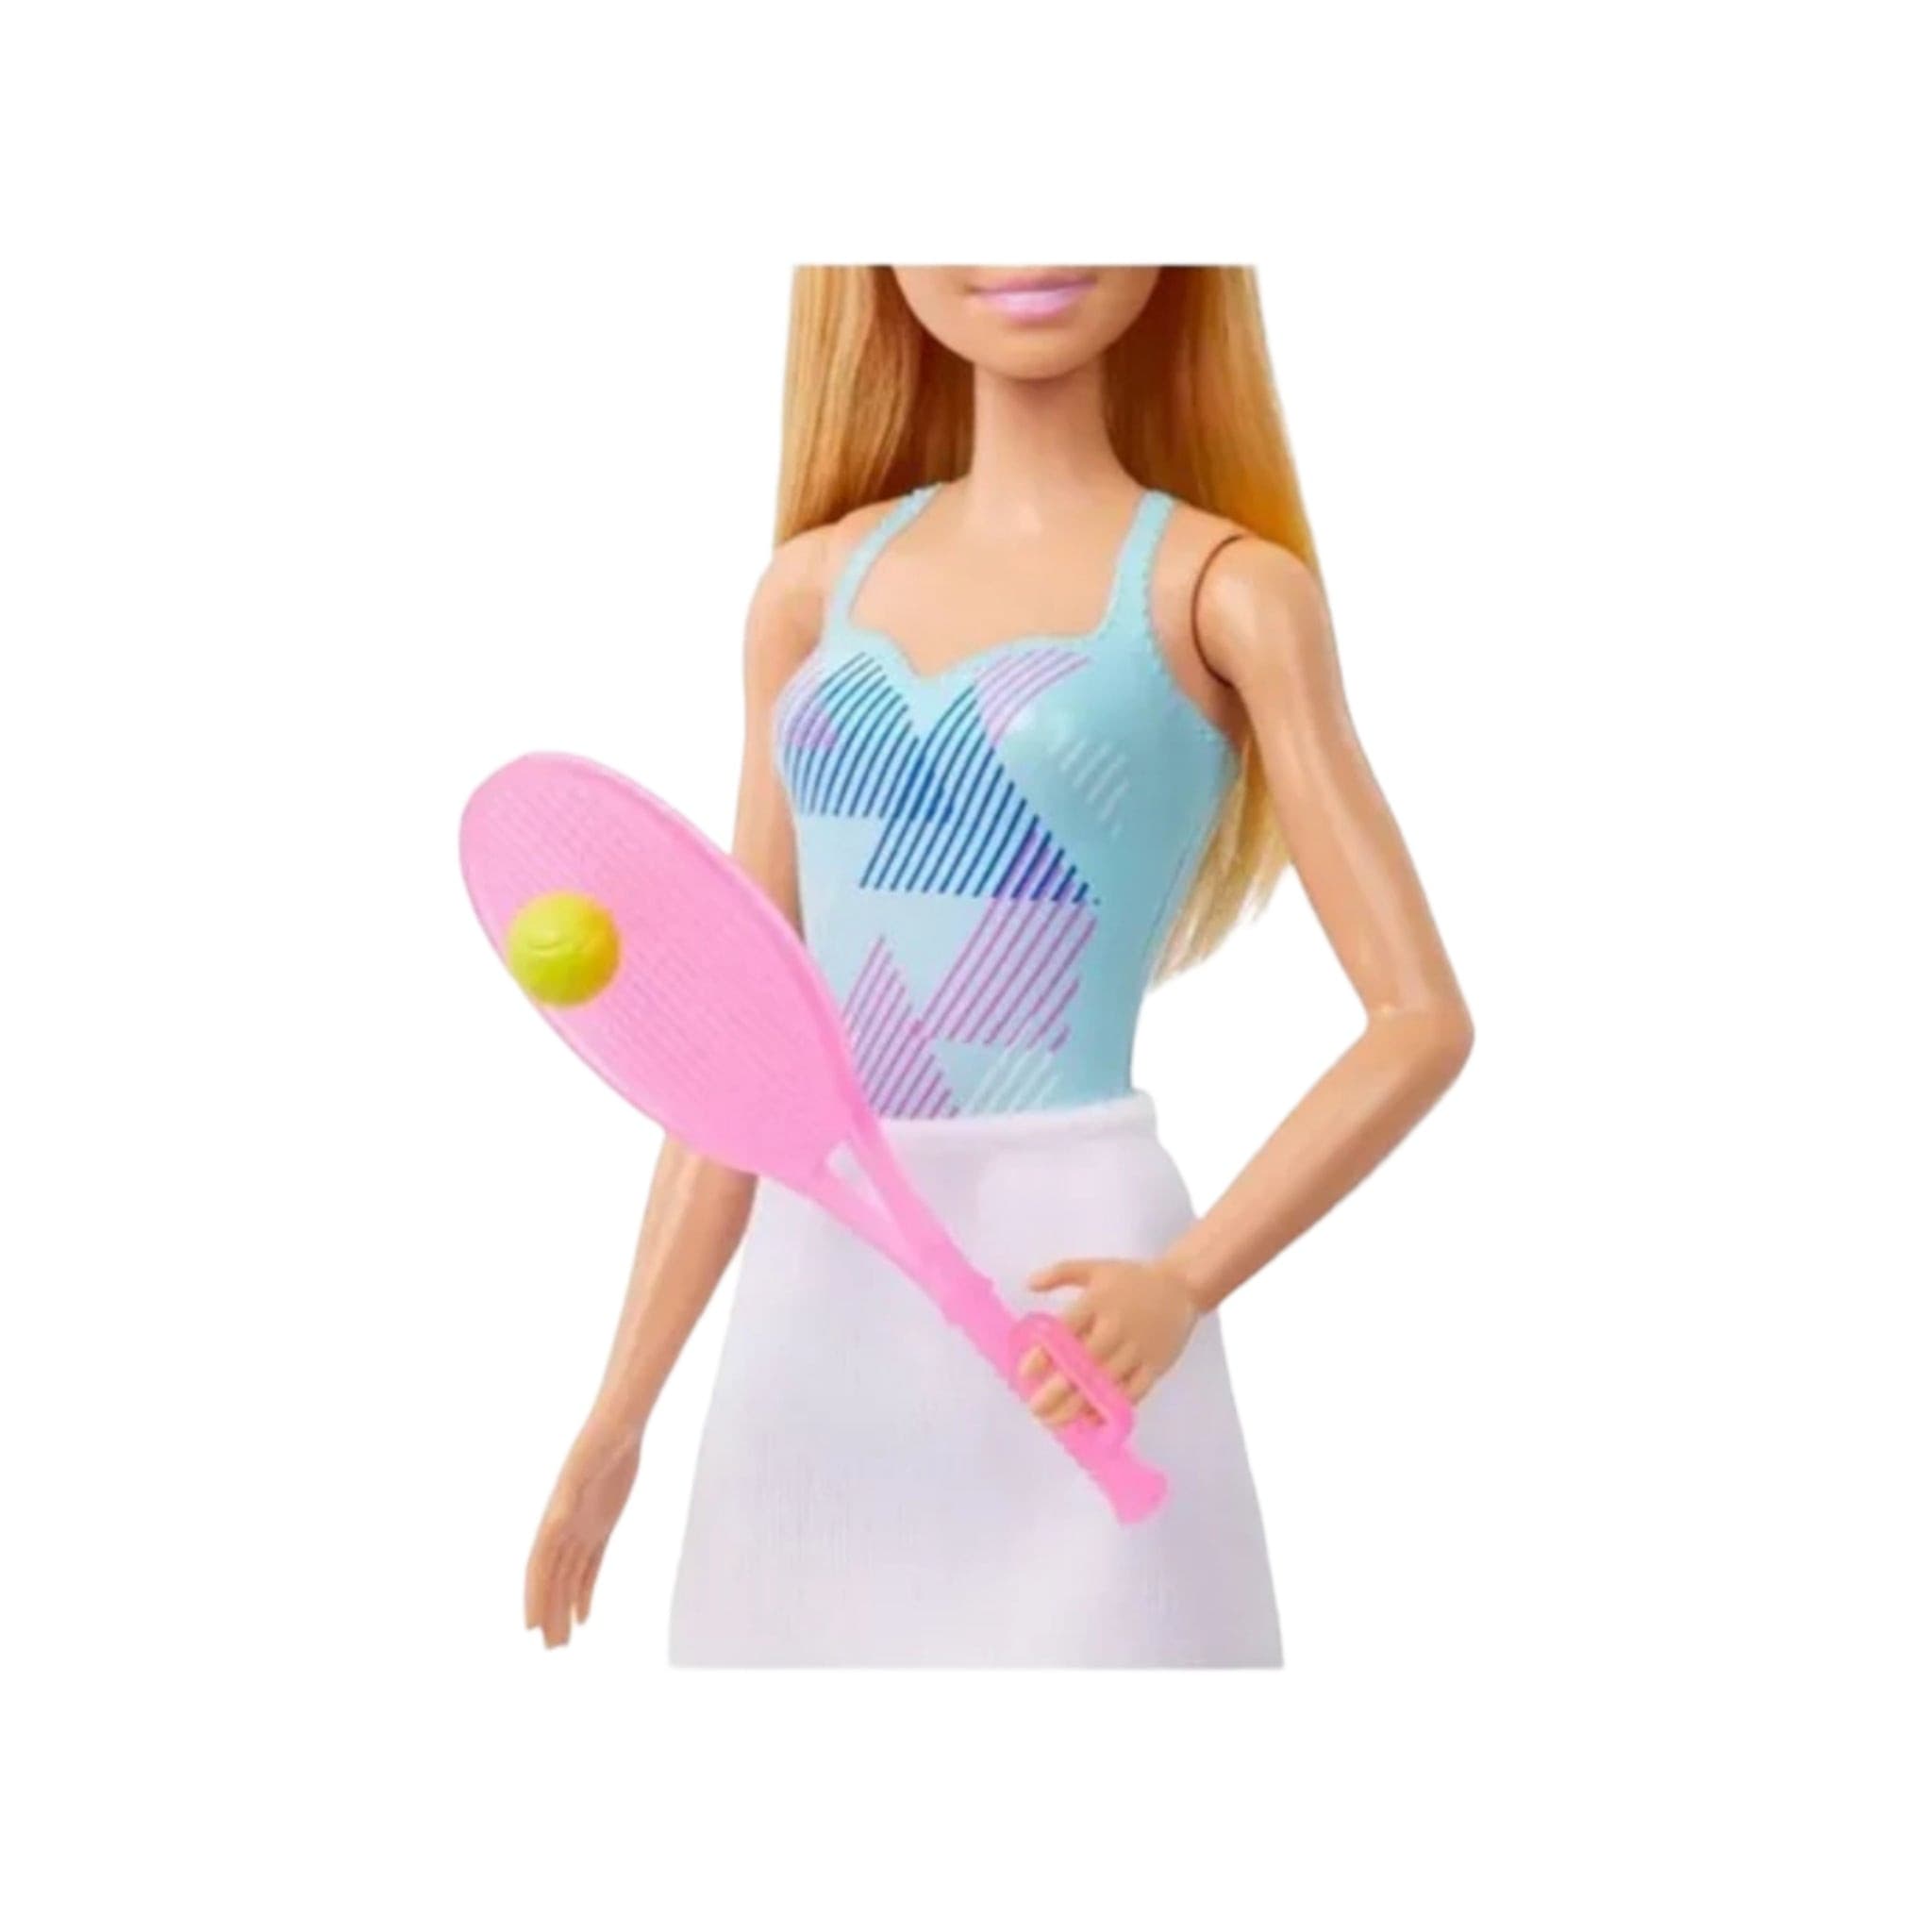 Barbie Mattel Sport Tennis Player